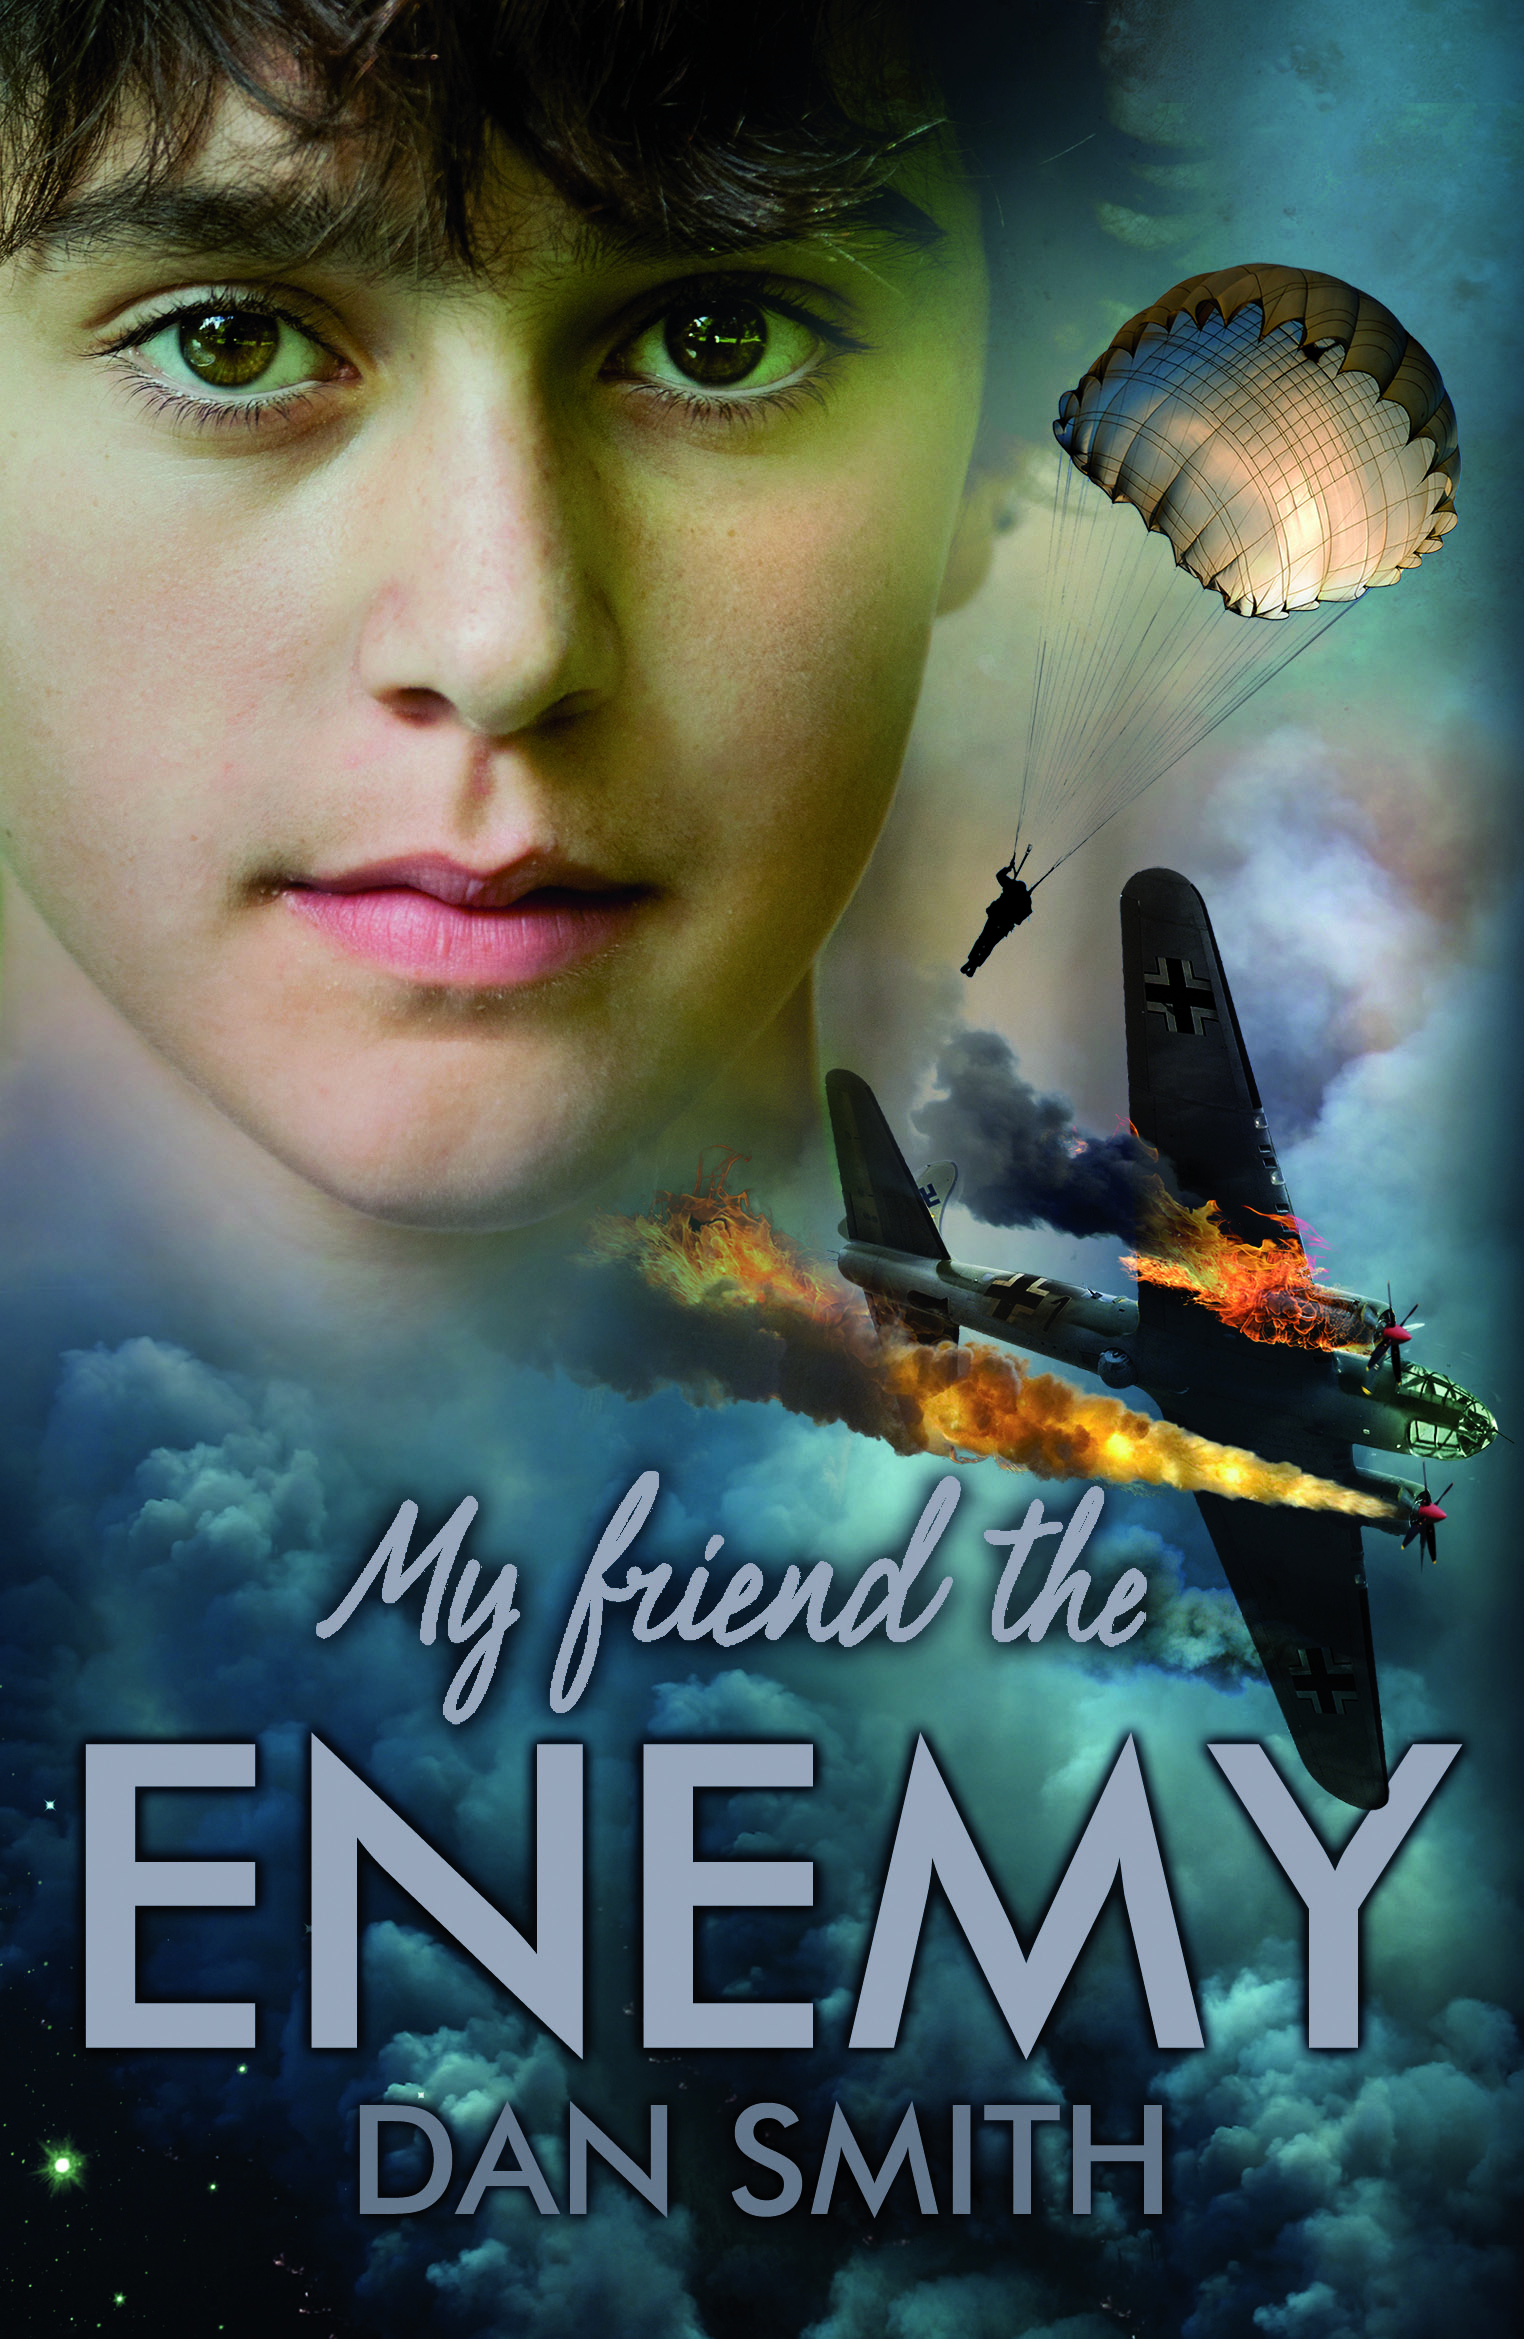 My friend the enemy by Dan smith